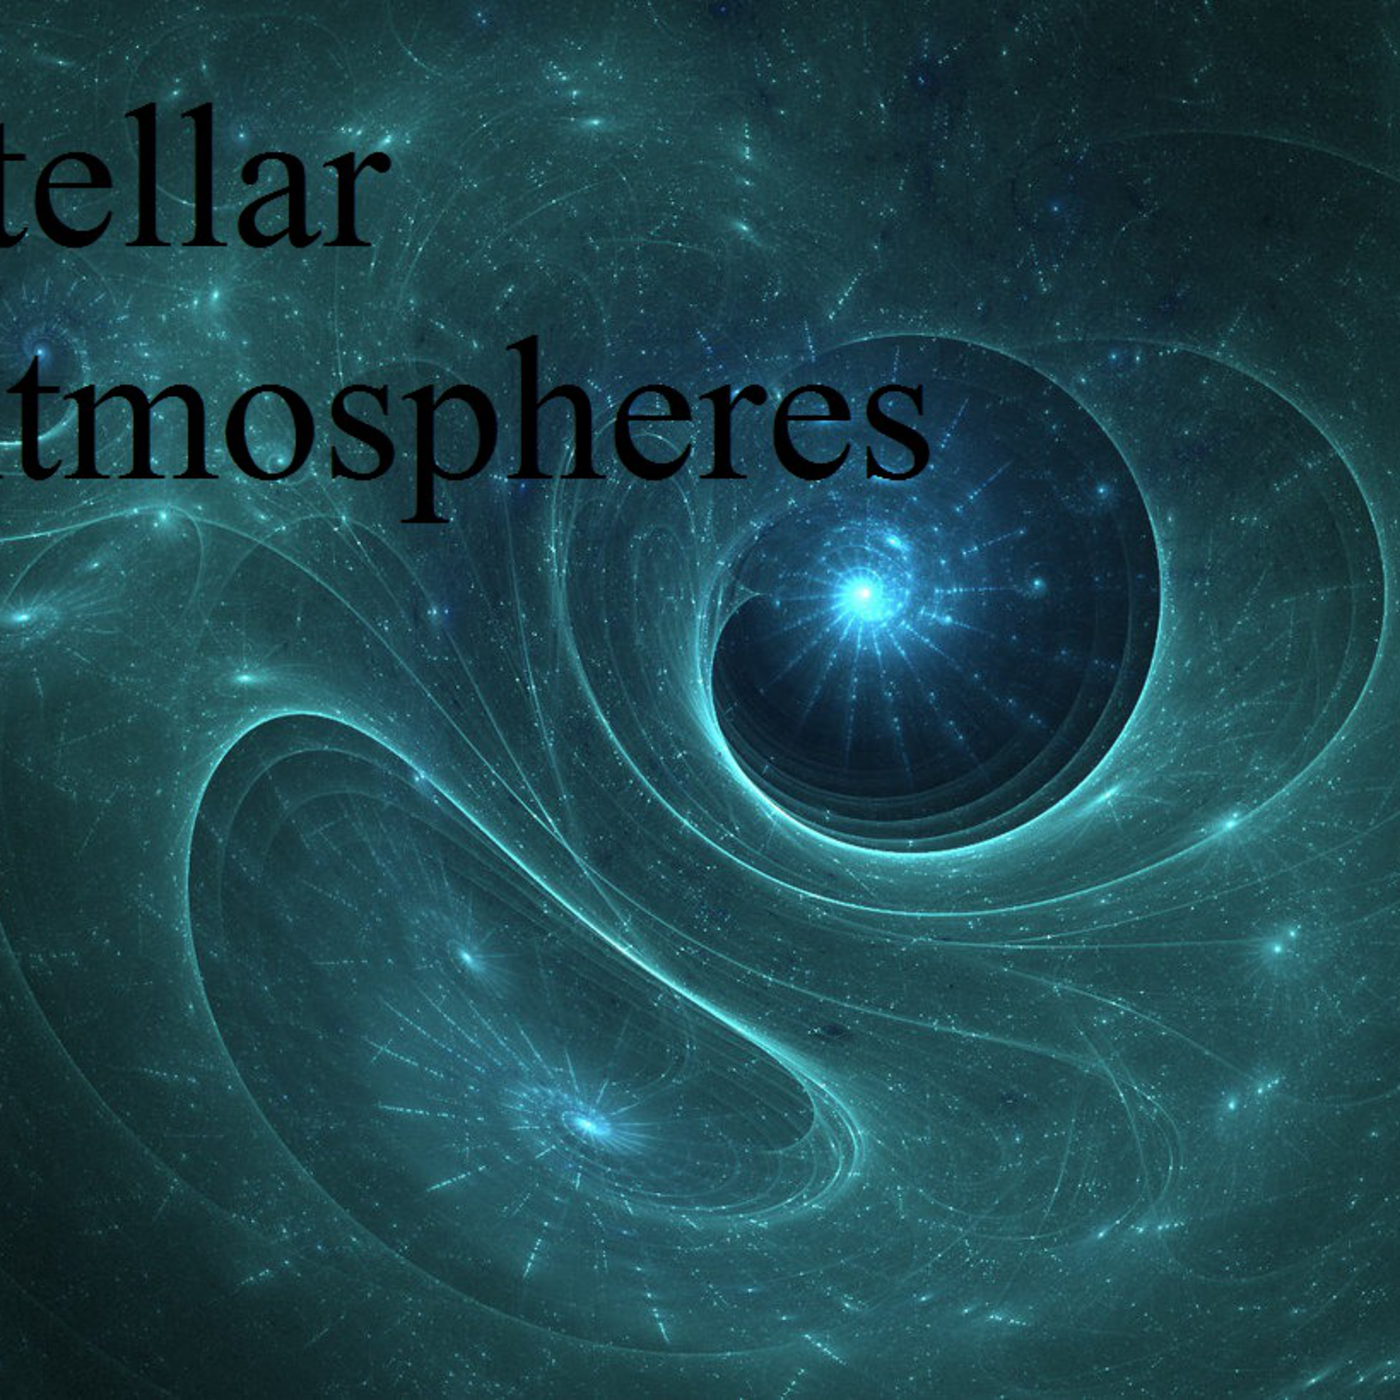 Stellar Atmospheres